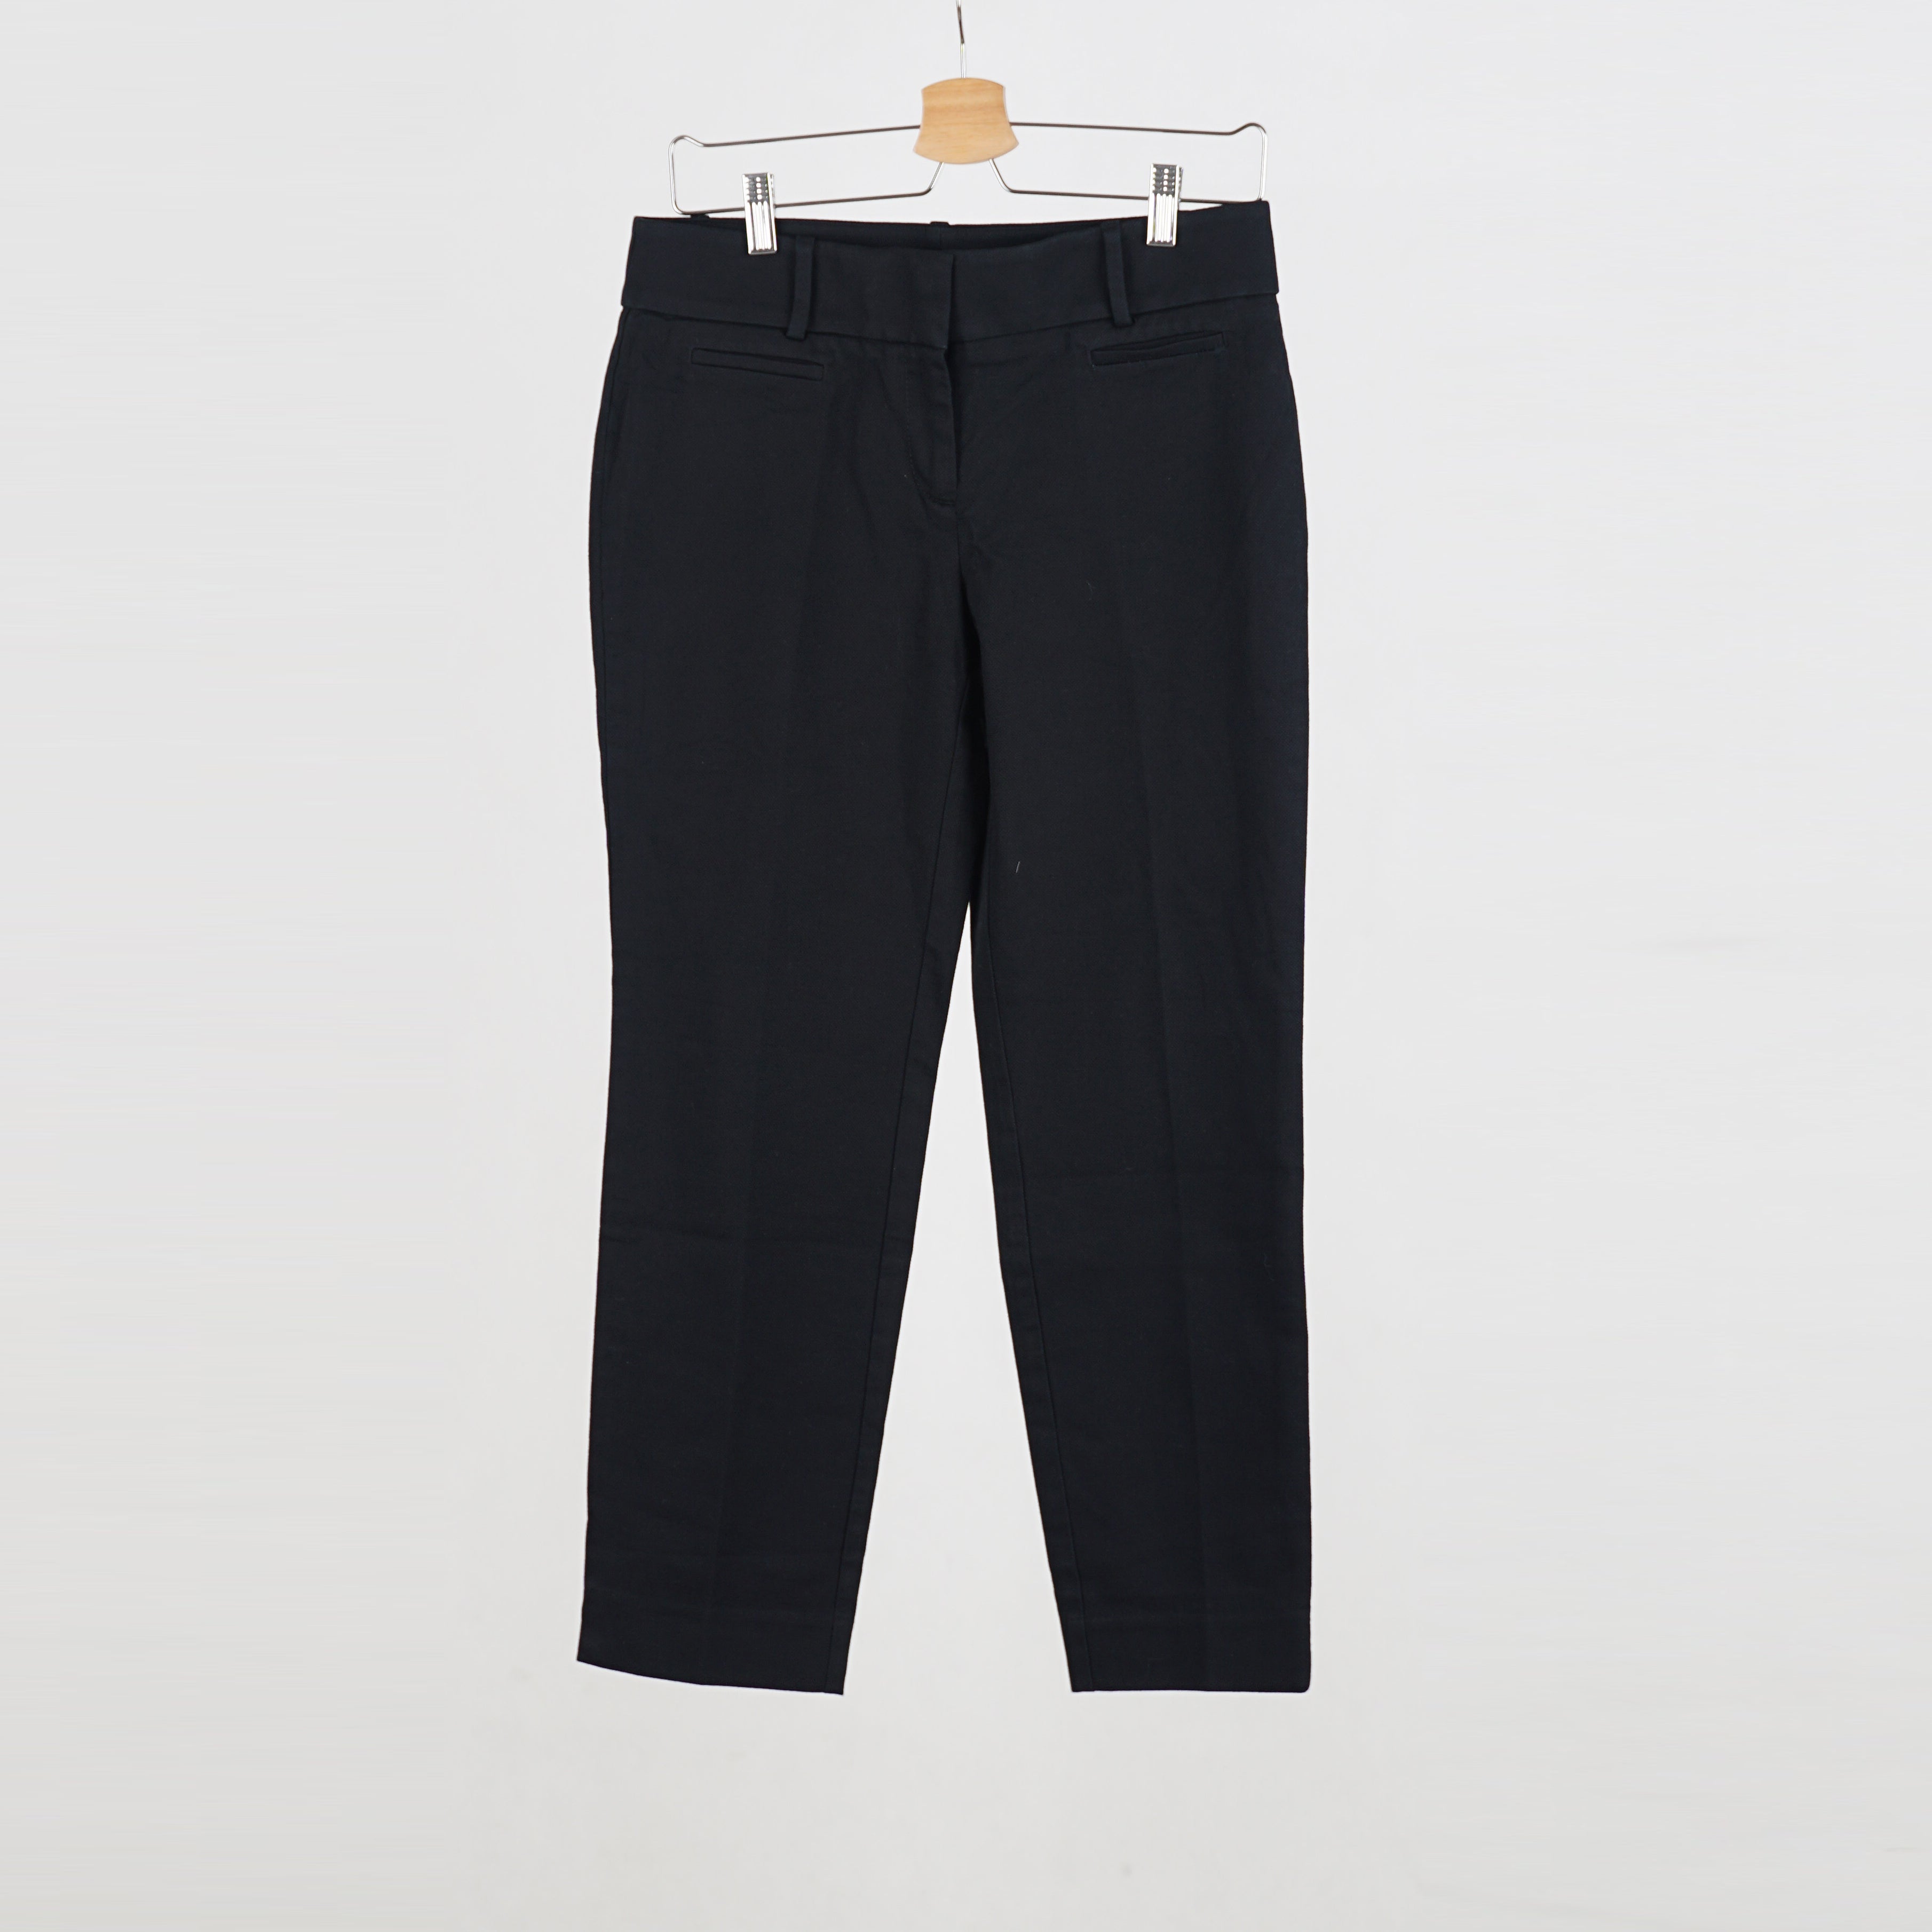 Celana Kerja Wanita Hitam - Women Long Pants Black (LTP 06)